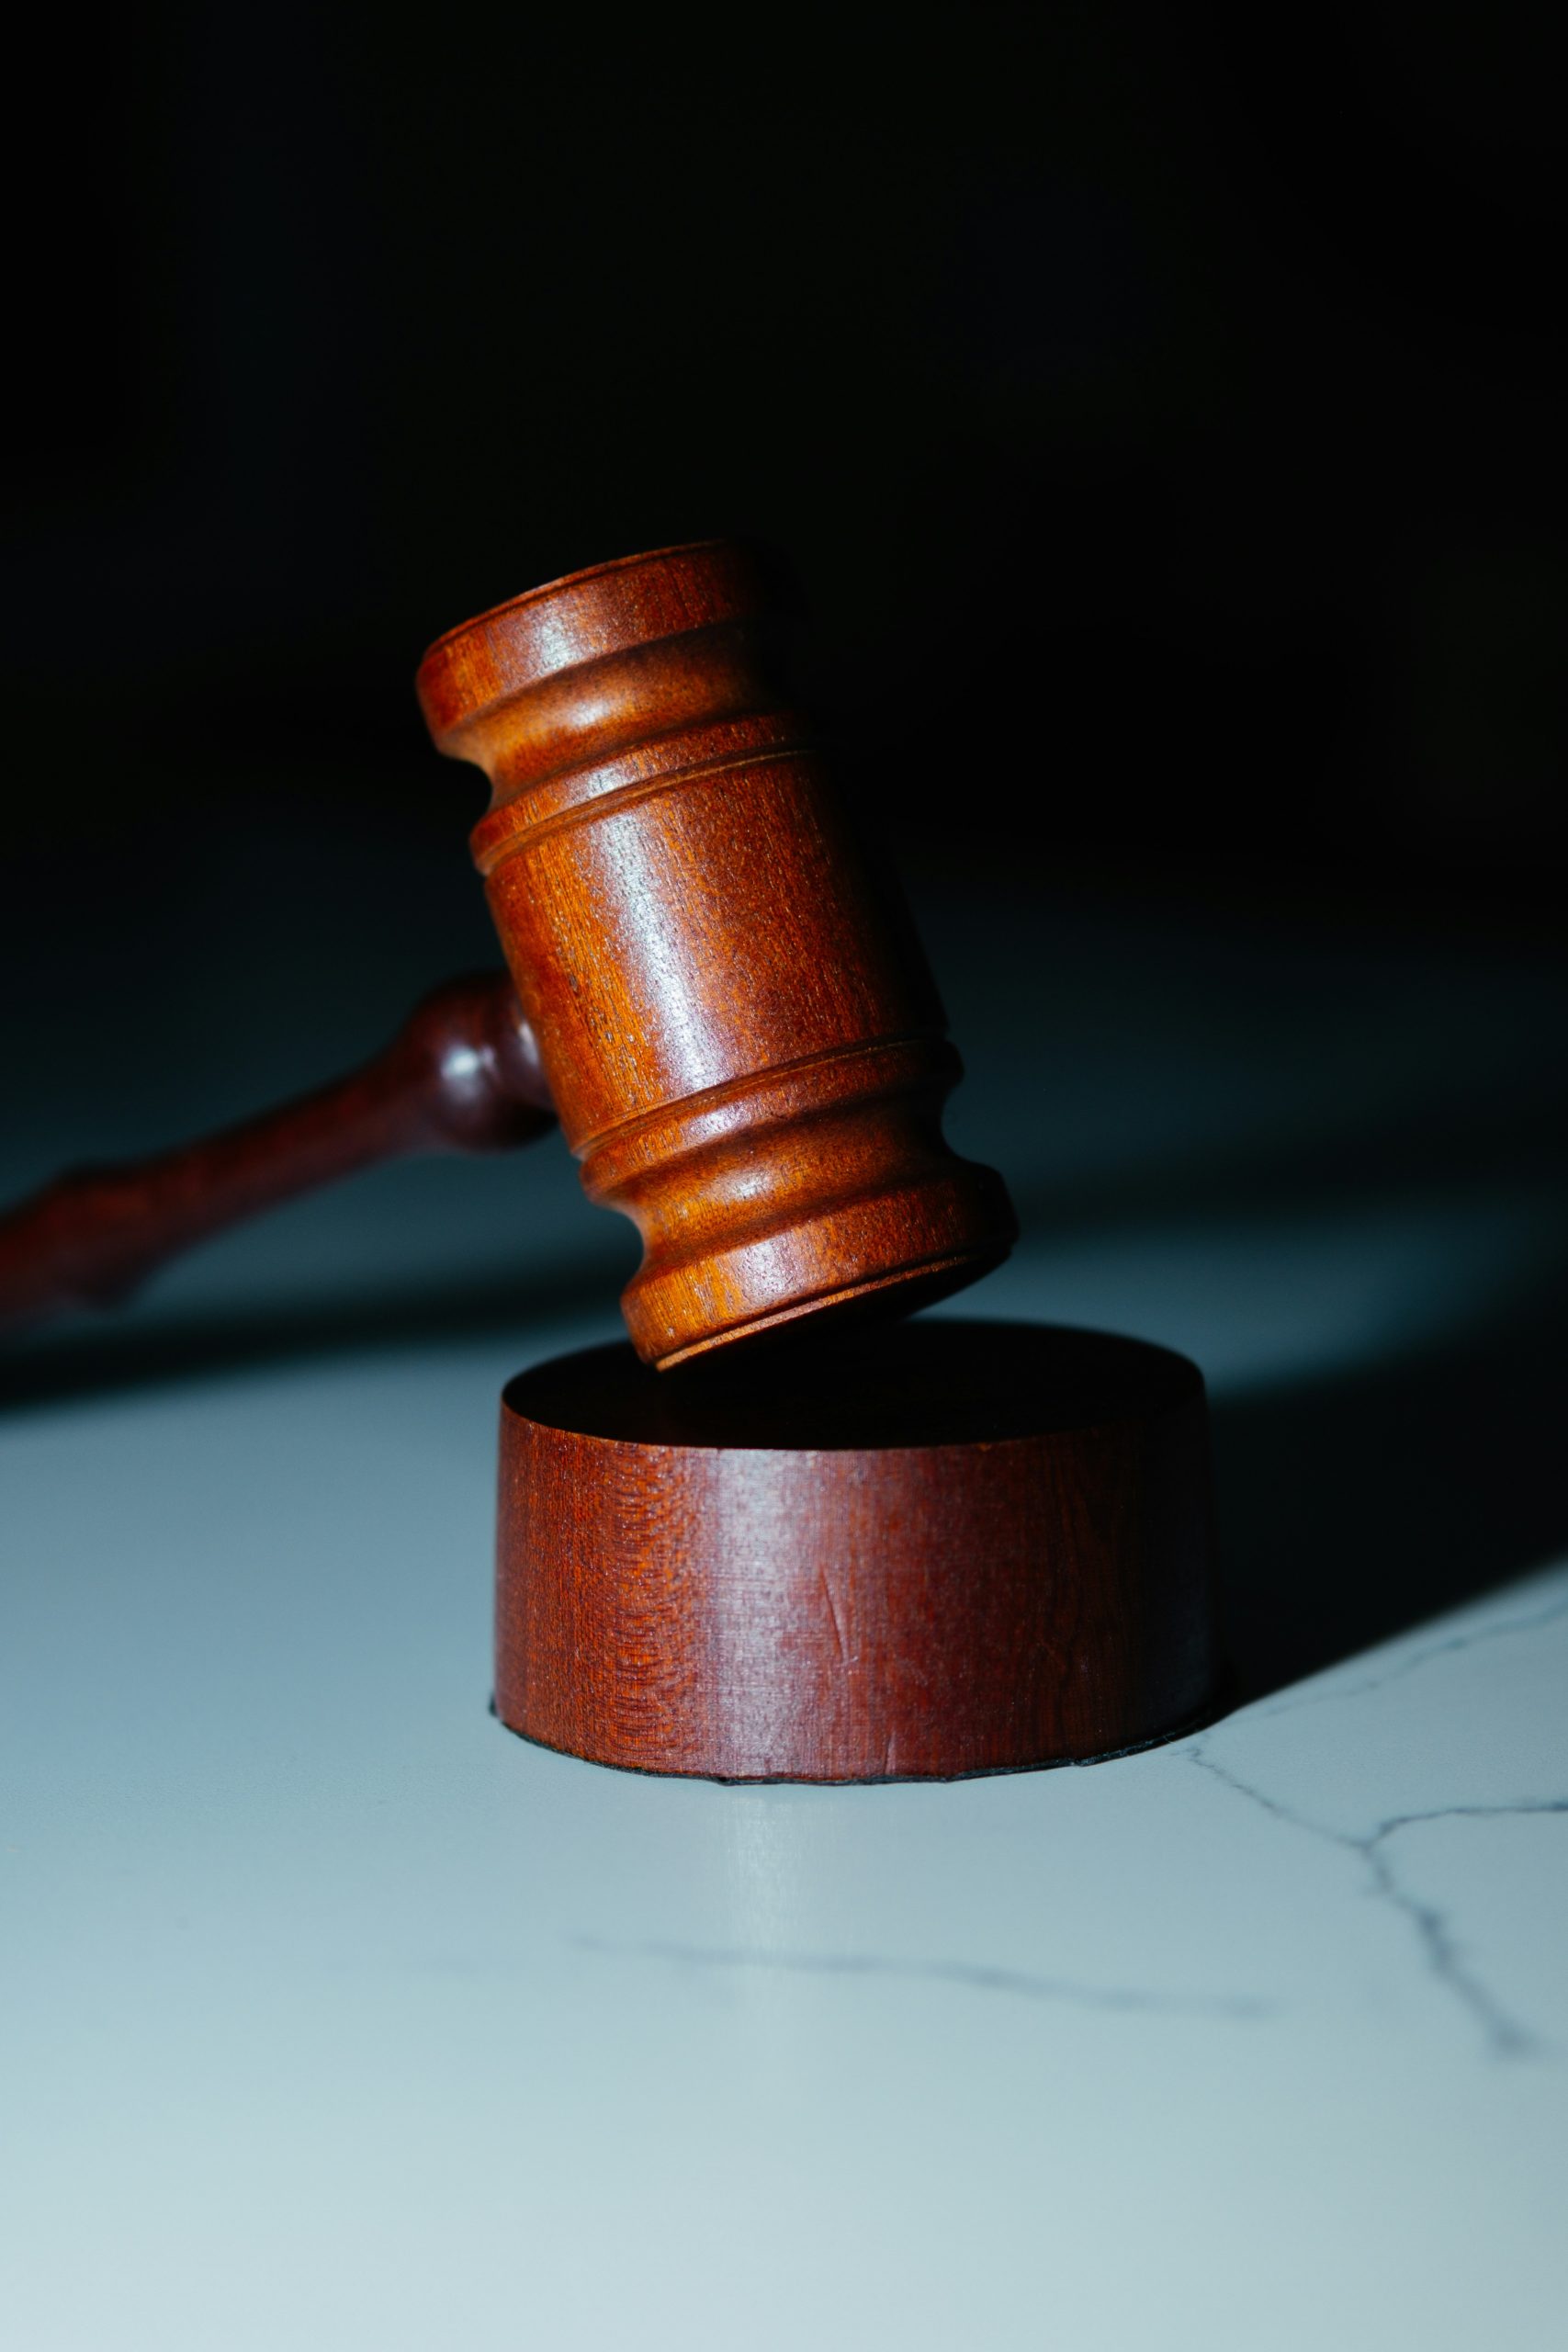 Can Courts Circumvent Mandatory Minimum Penalties Through Plea Bargaining?